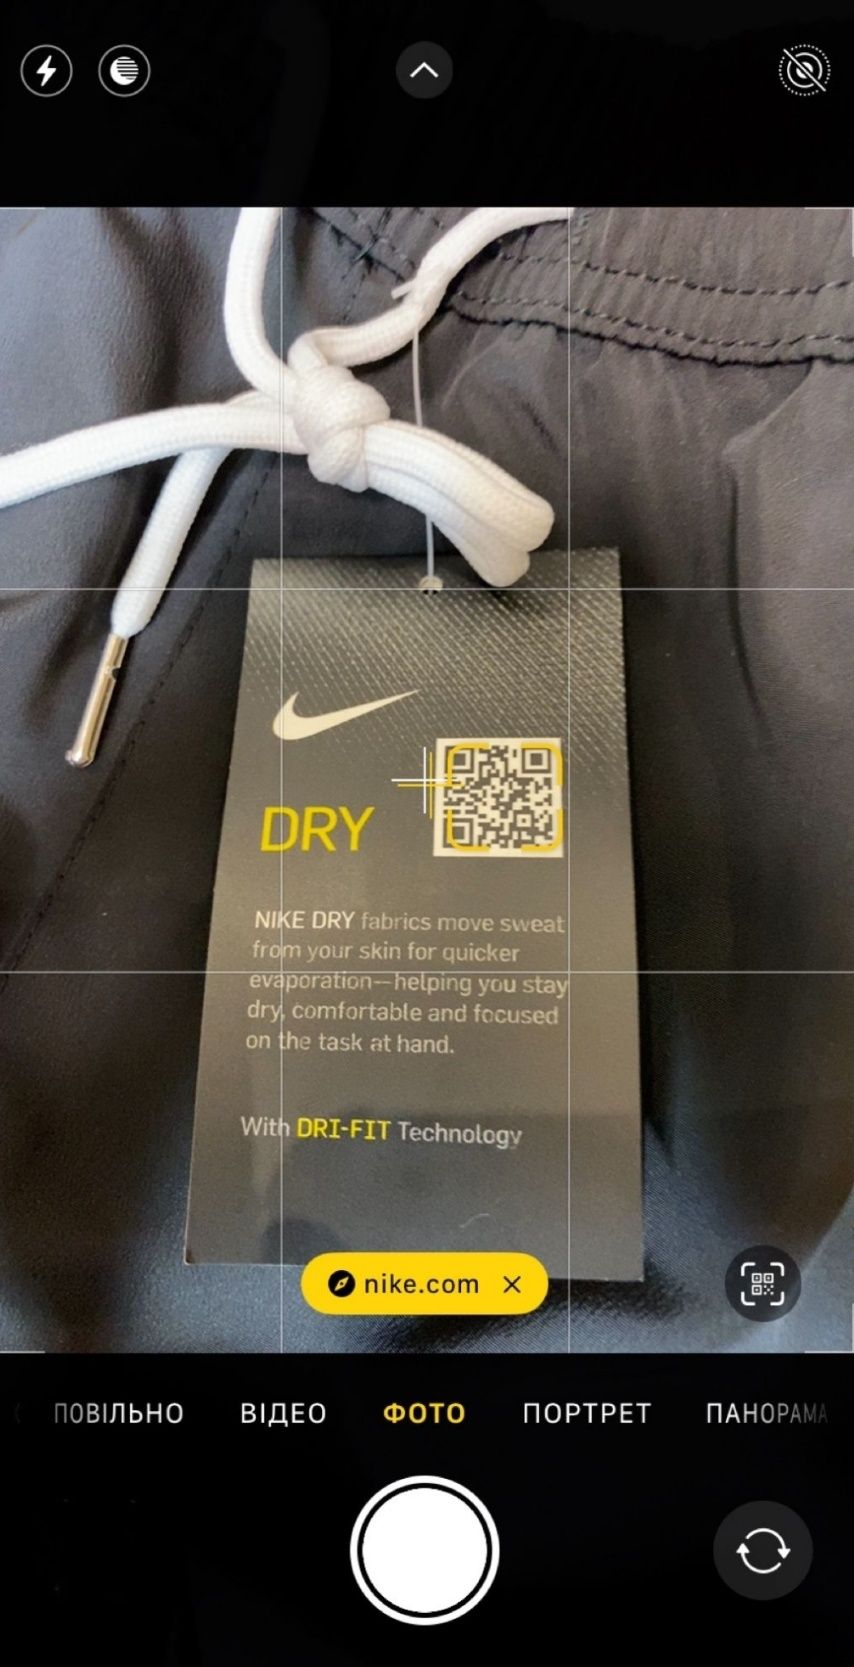 Нейлонові штани найк на лампасах | Nike Nylon